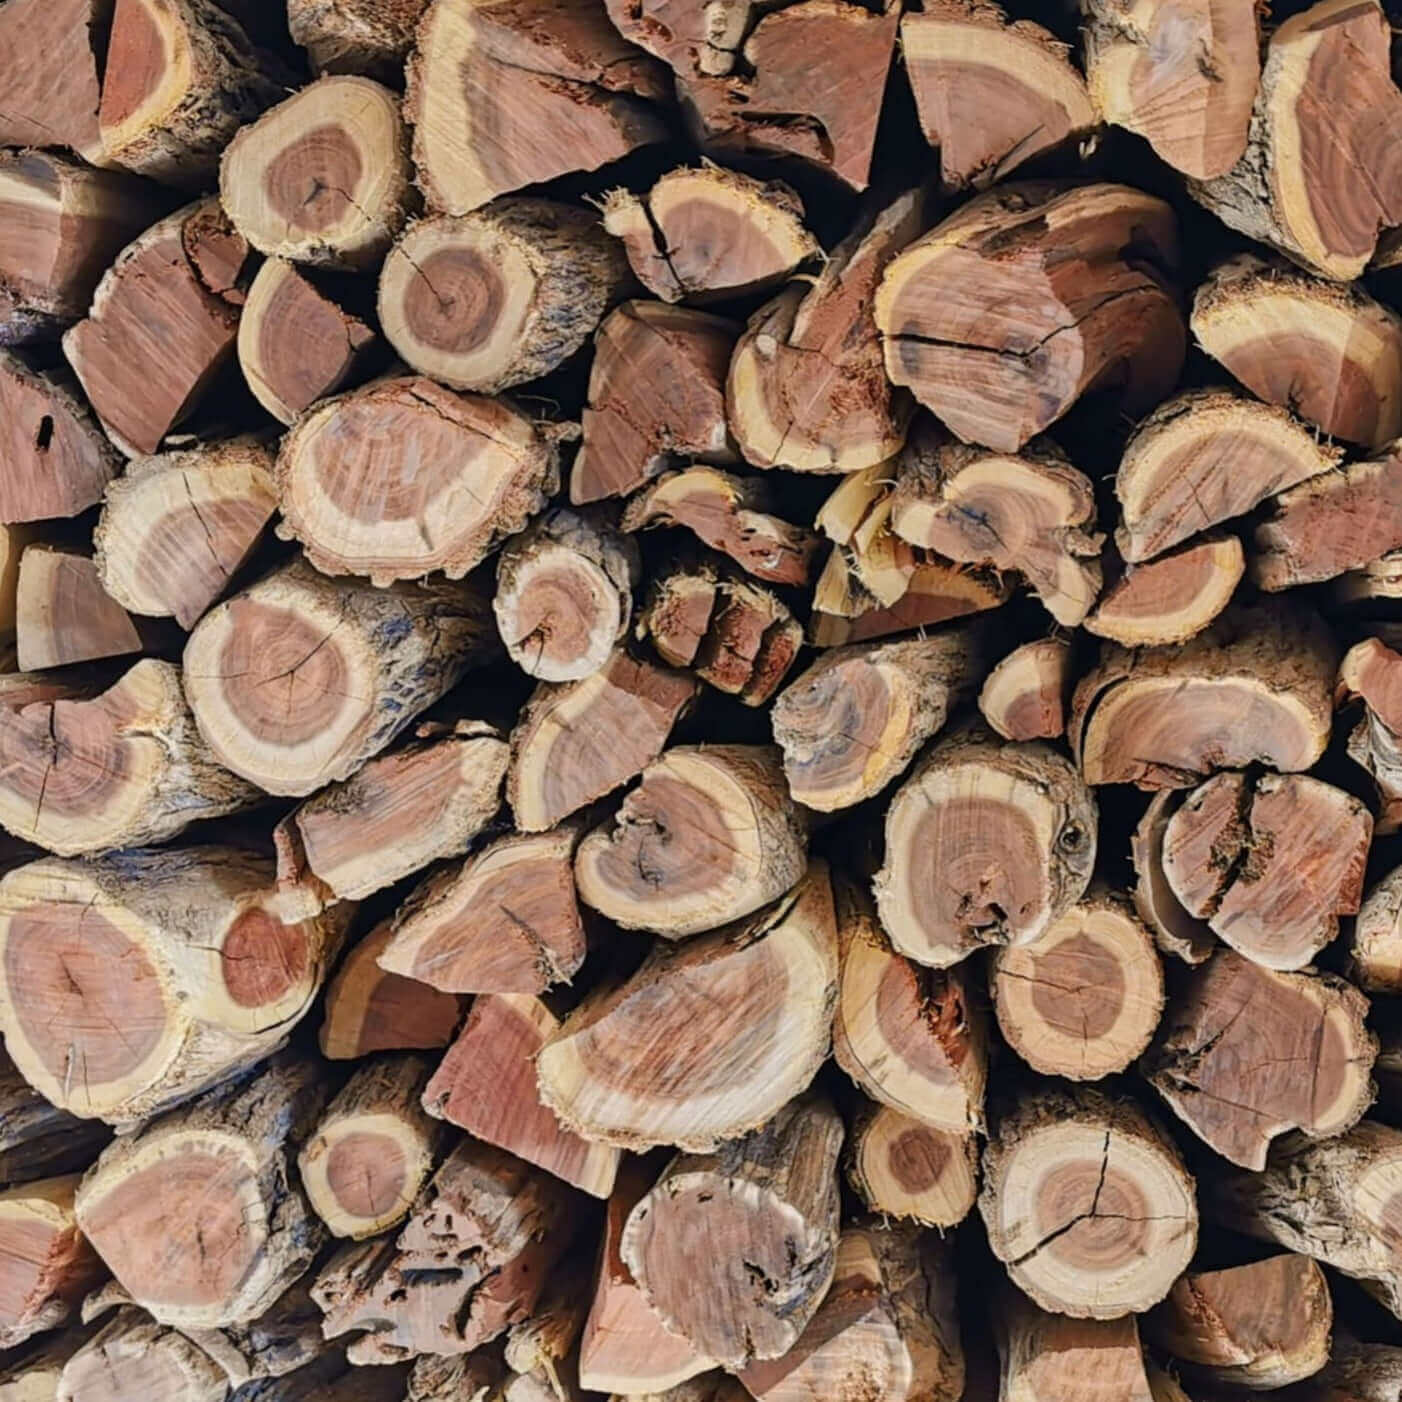 Sekelbos Namibian Hardwood 1000KG Bulk (Sicklebush)  1 Ton - Cape Town Firewood